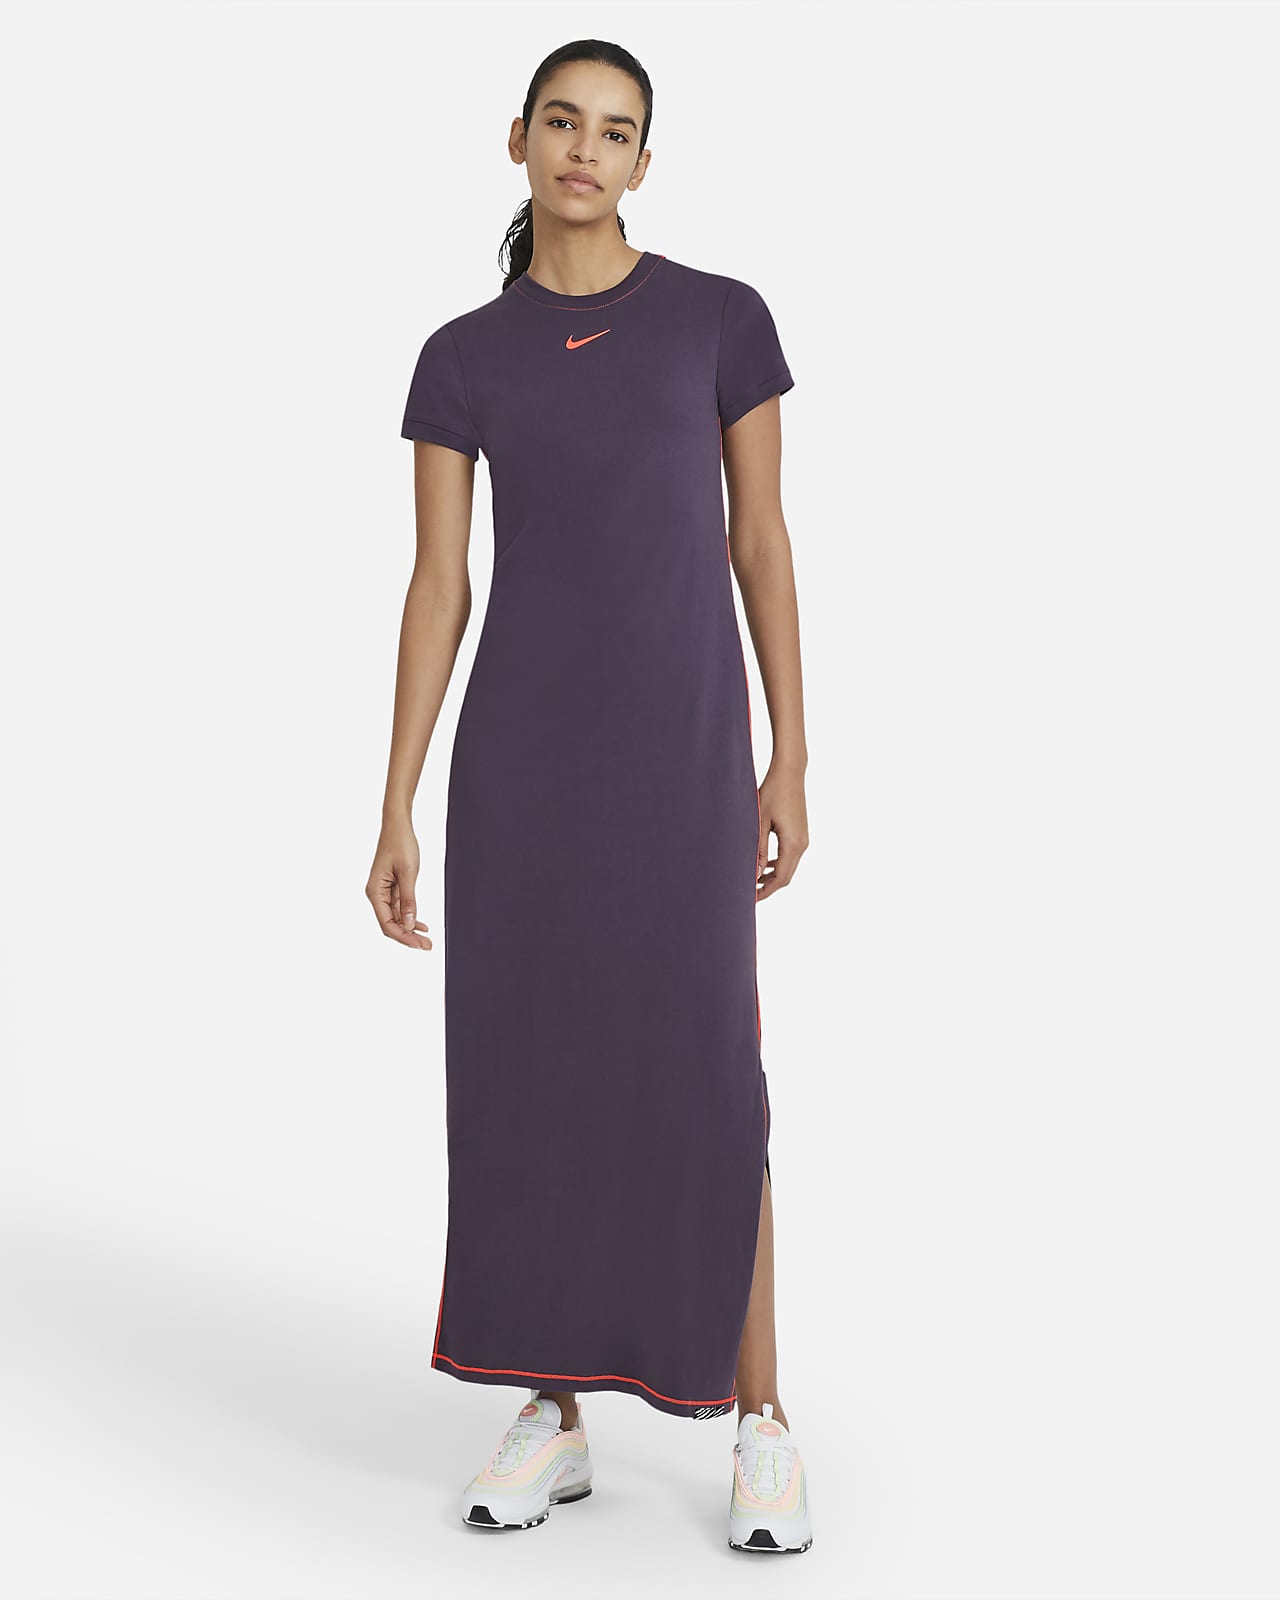 nike purple dress